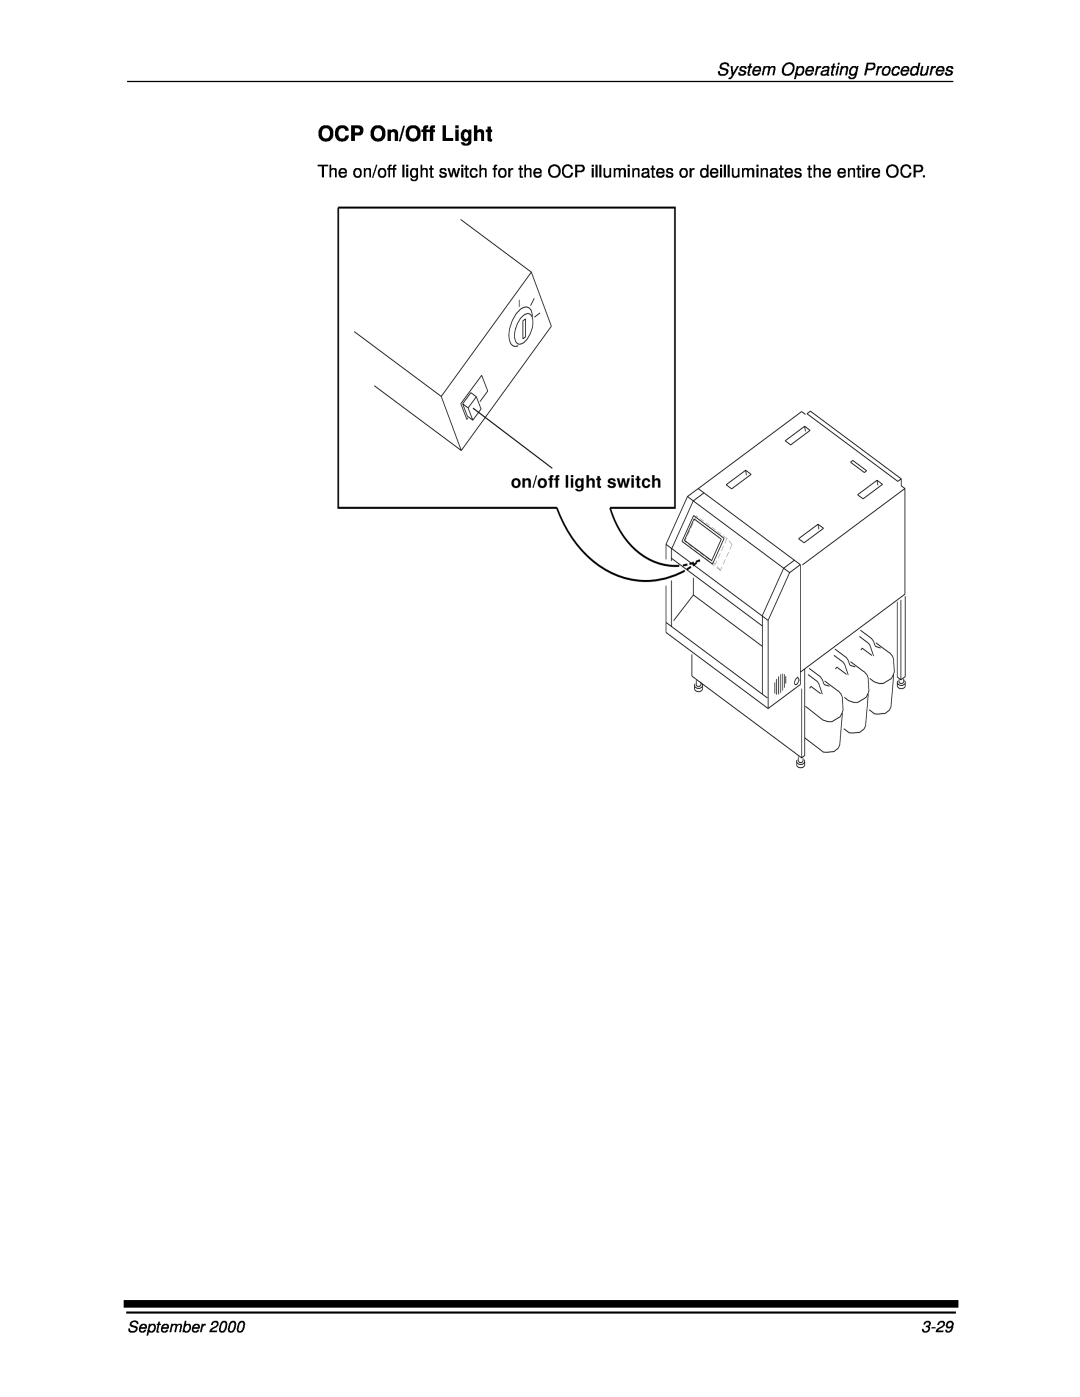 Kodak 20P manual OCP On/Off Light, System Operating Procedures, on/off light switch 